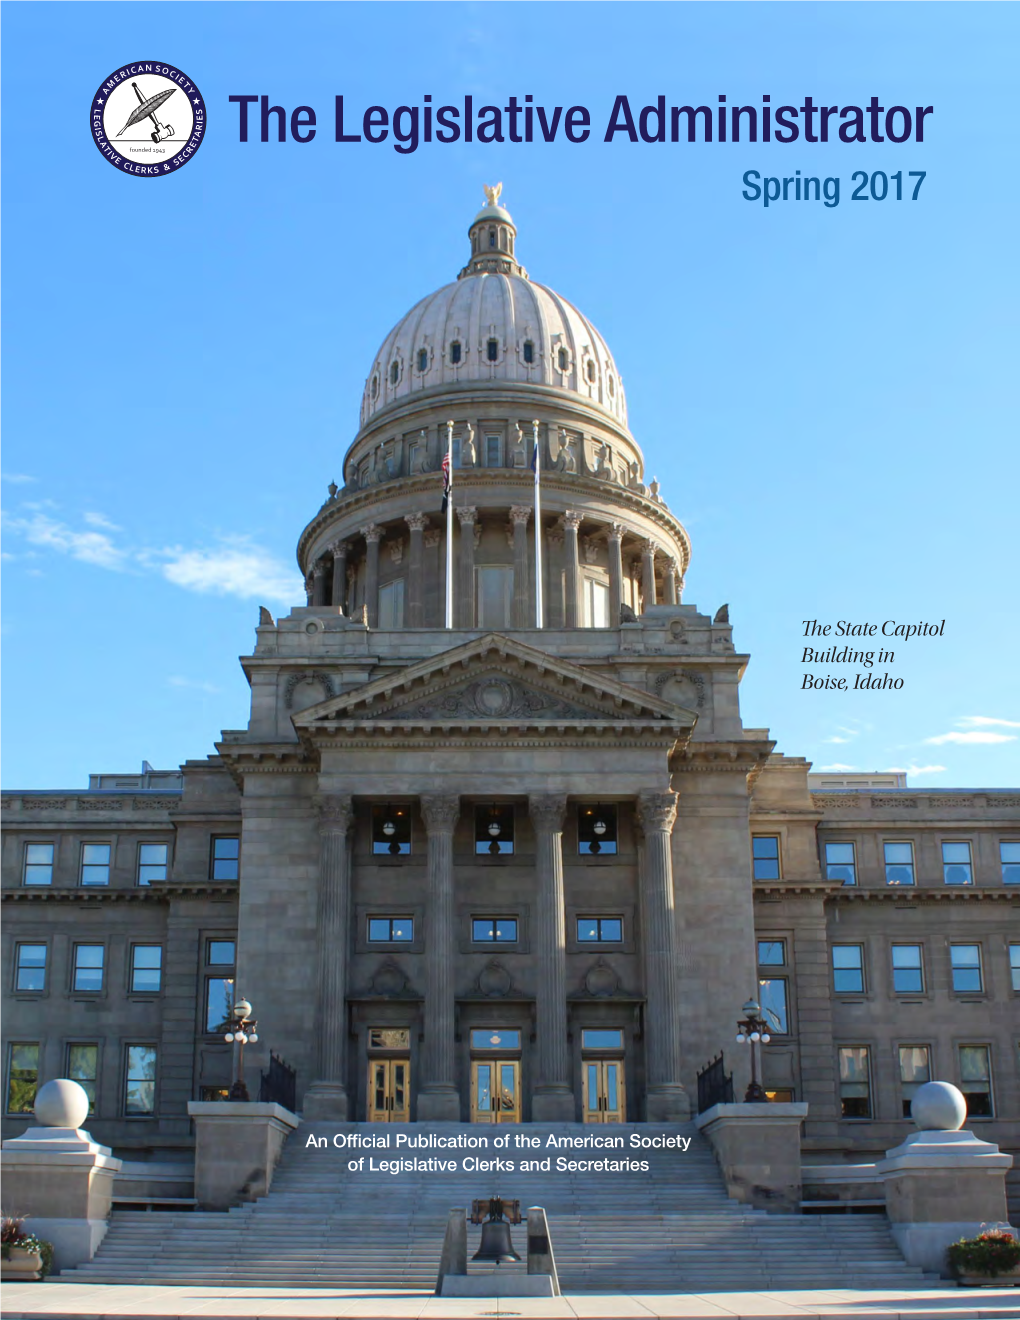 The Legislative Administrator Spring 2017